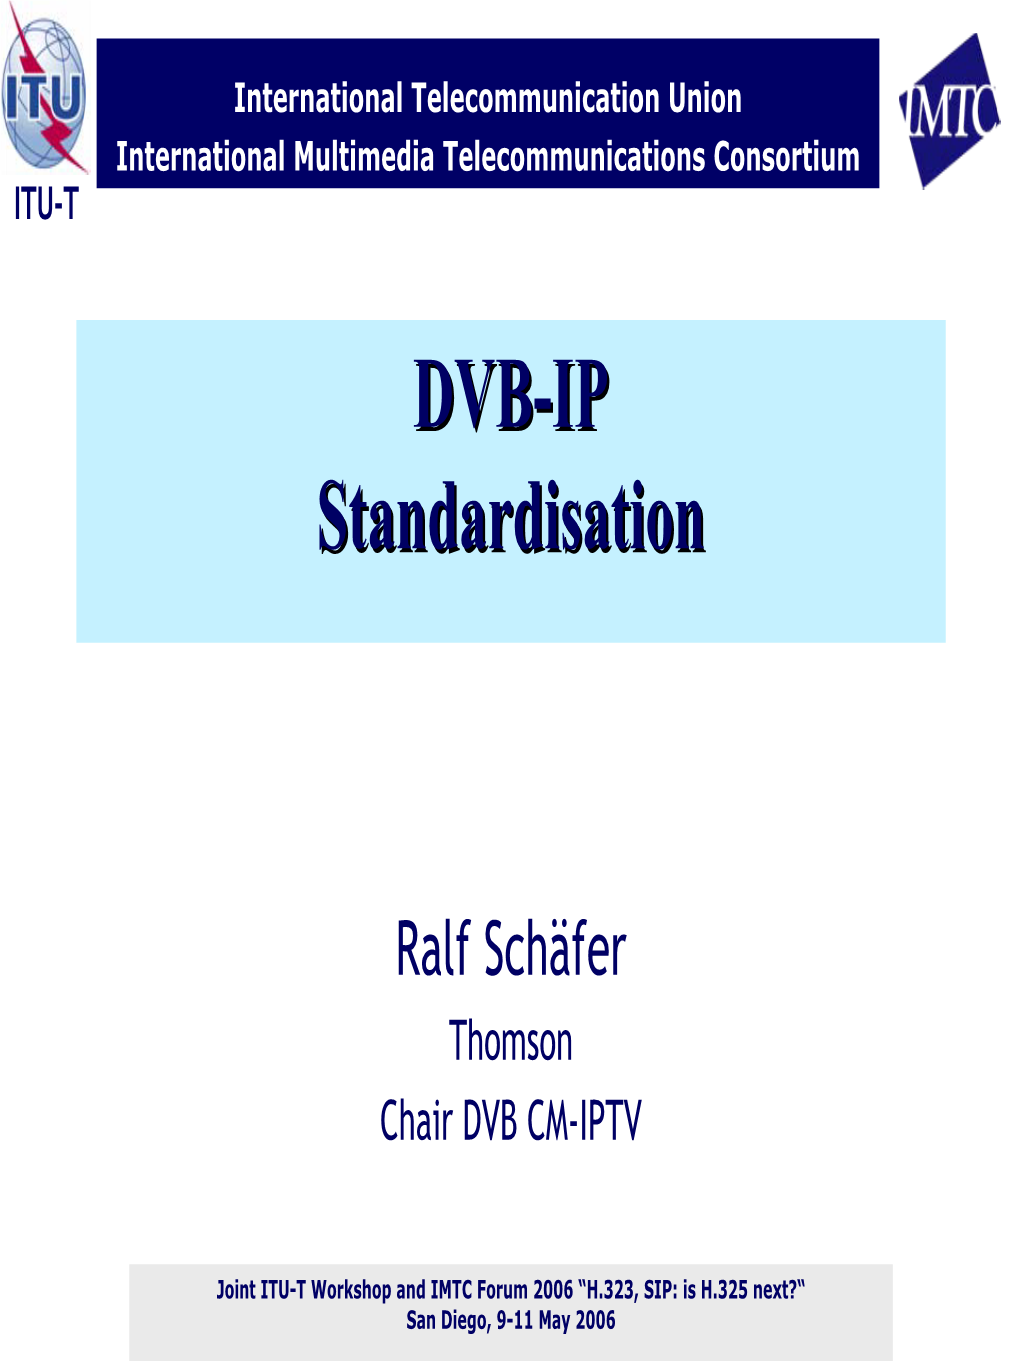 DVB-IP Standardisation